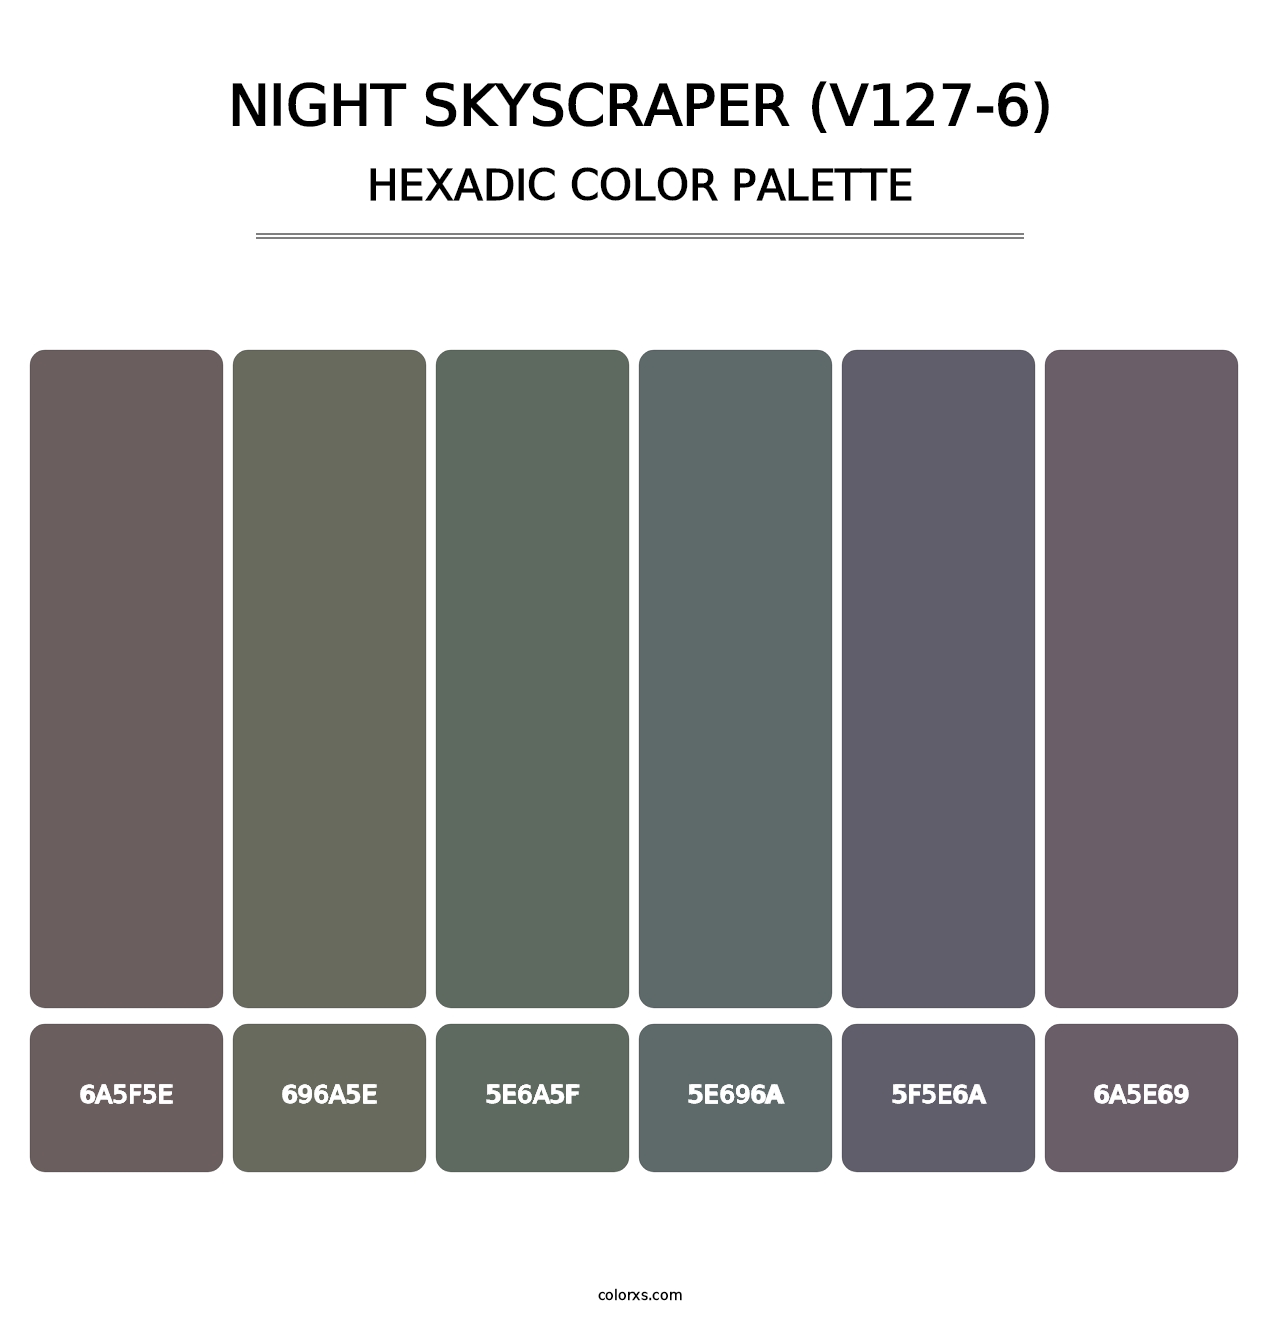 Night Skyscraper (V127-6) - Hexadic Color Palette